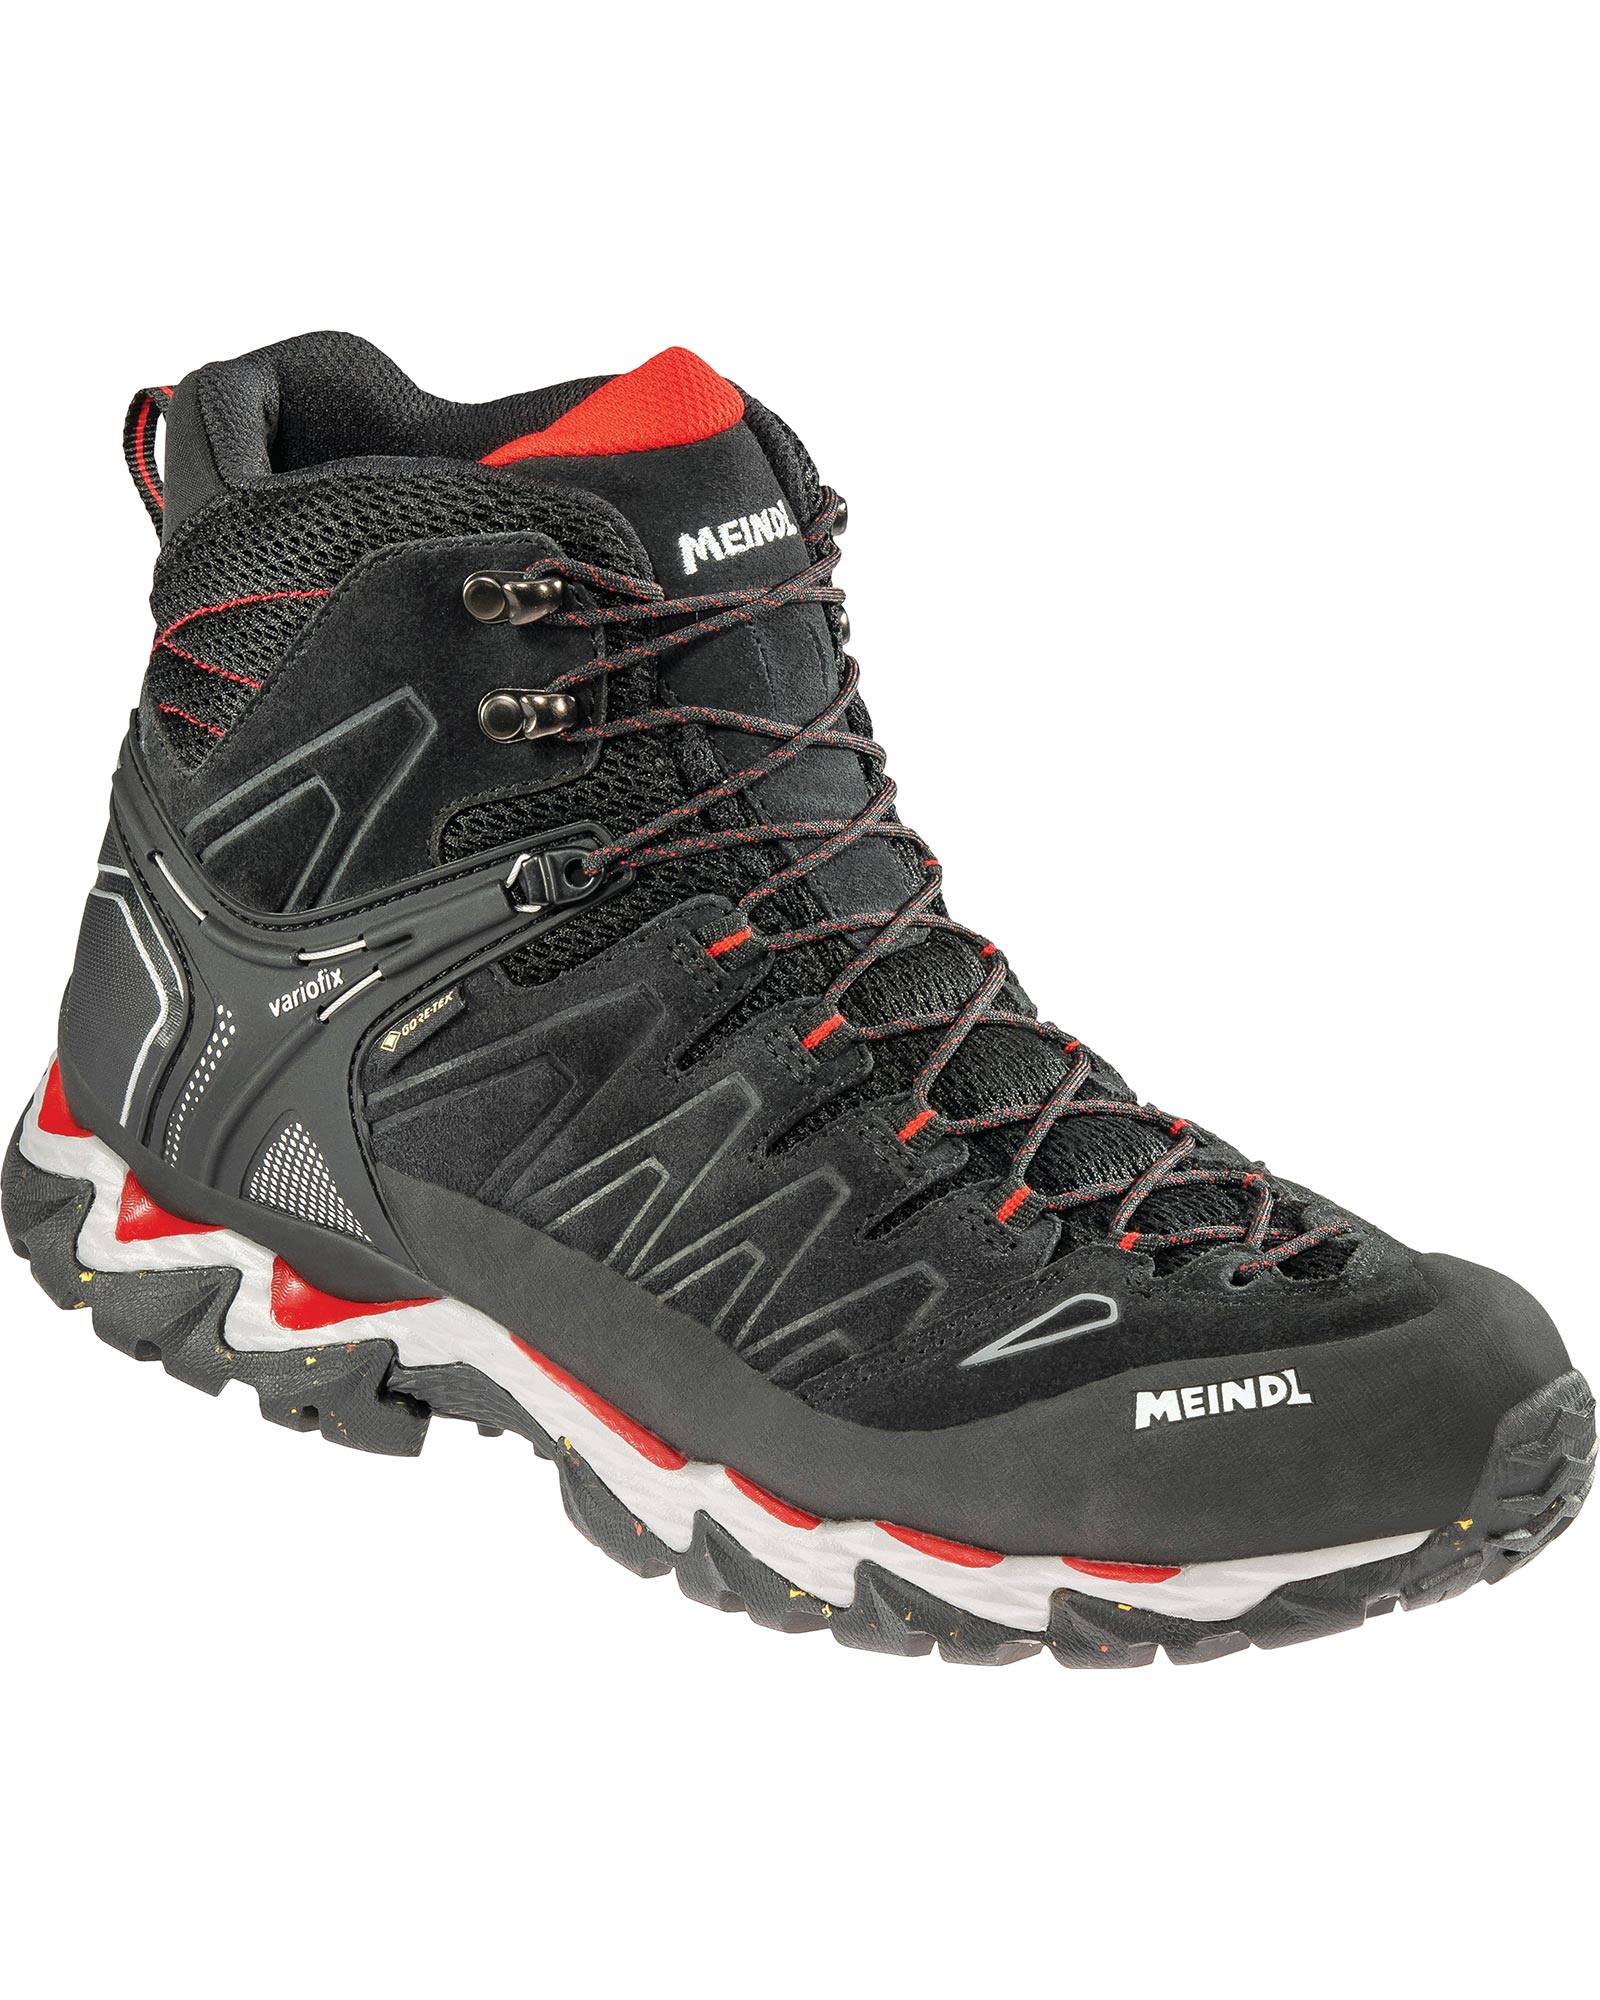 Meindl Lite Hike GORE TEX Men’s Boots - Black/Red UK 7.5